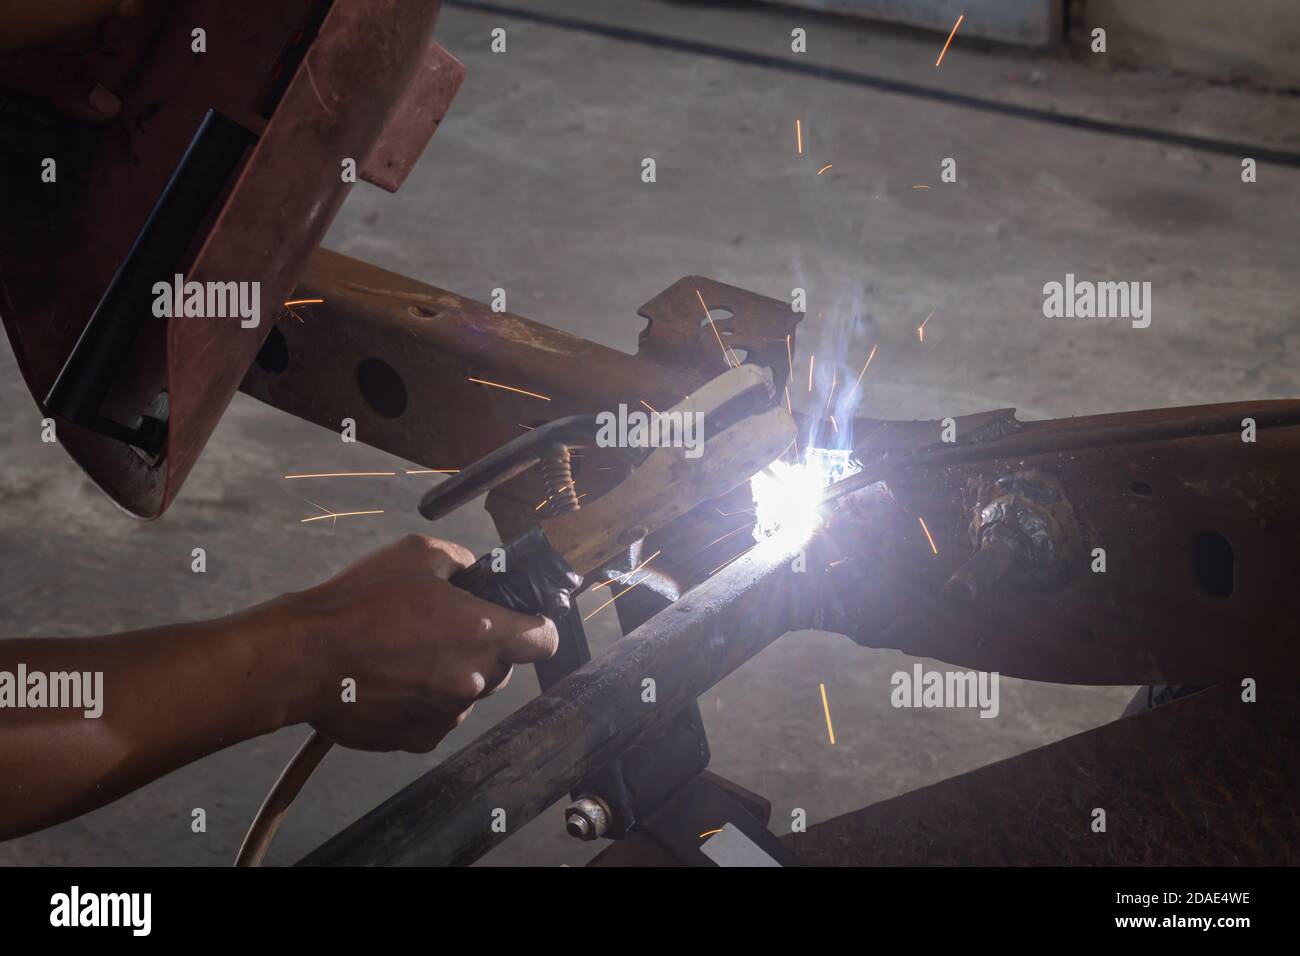 Hand of Welding Worker Hold Welding Mask and Welding Metal or Steel Construction of Car in Garage Stock Photo